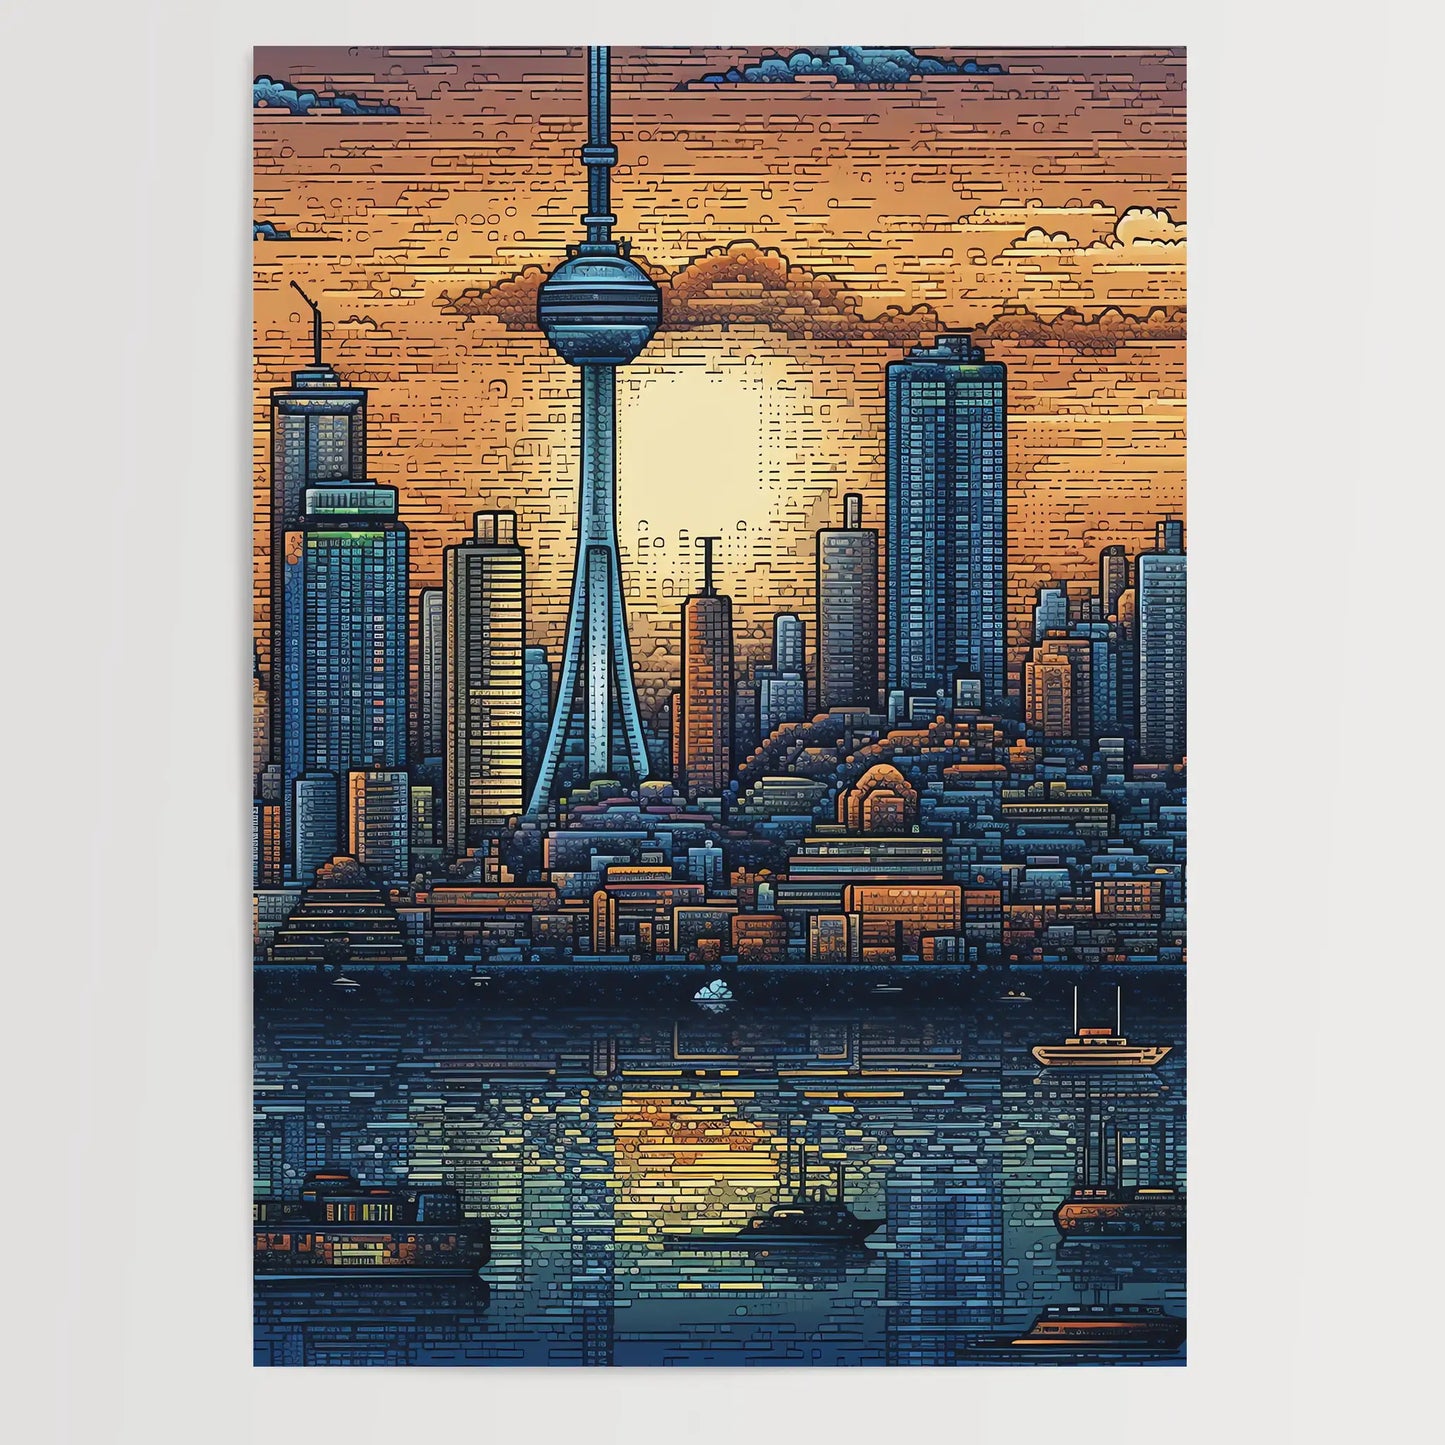 Seoul No 2 Pixel Art Poster